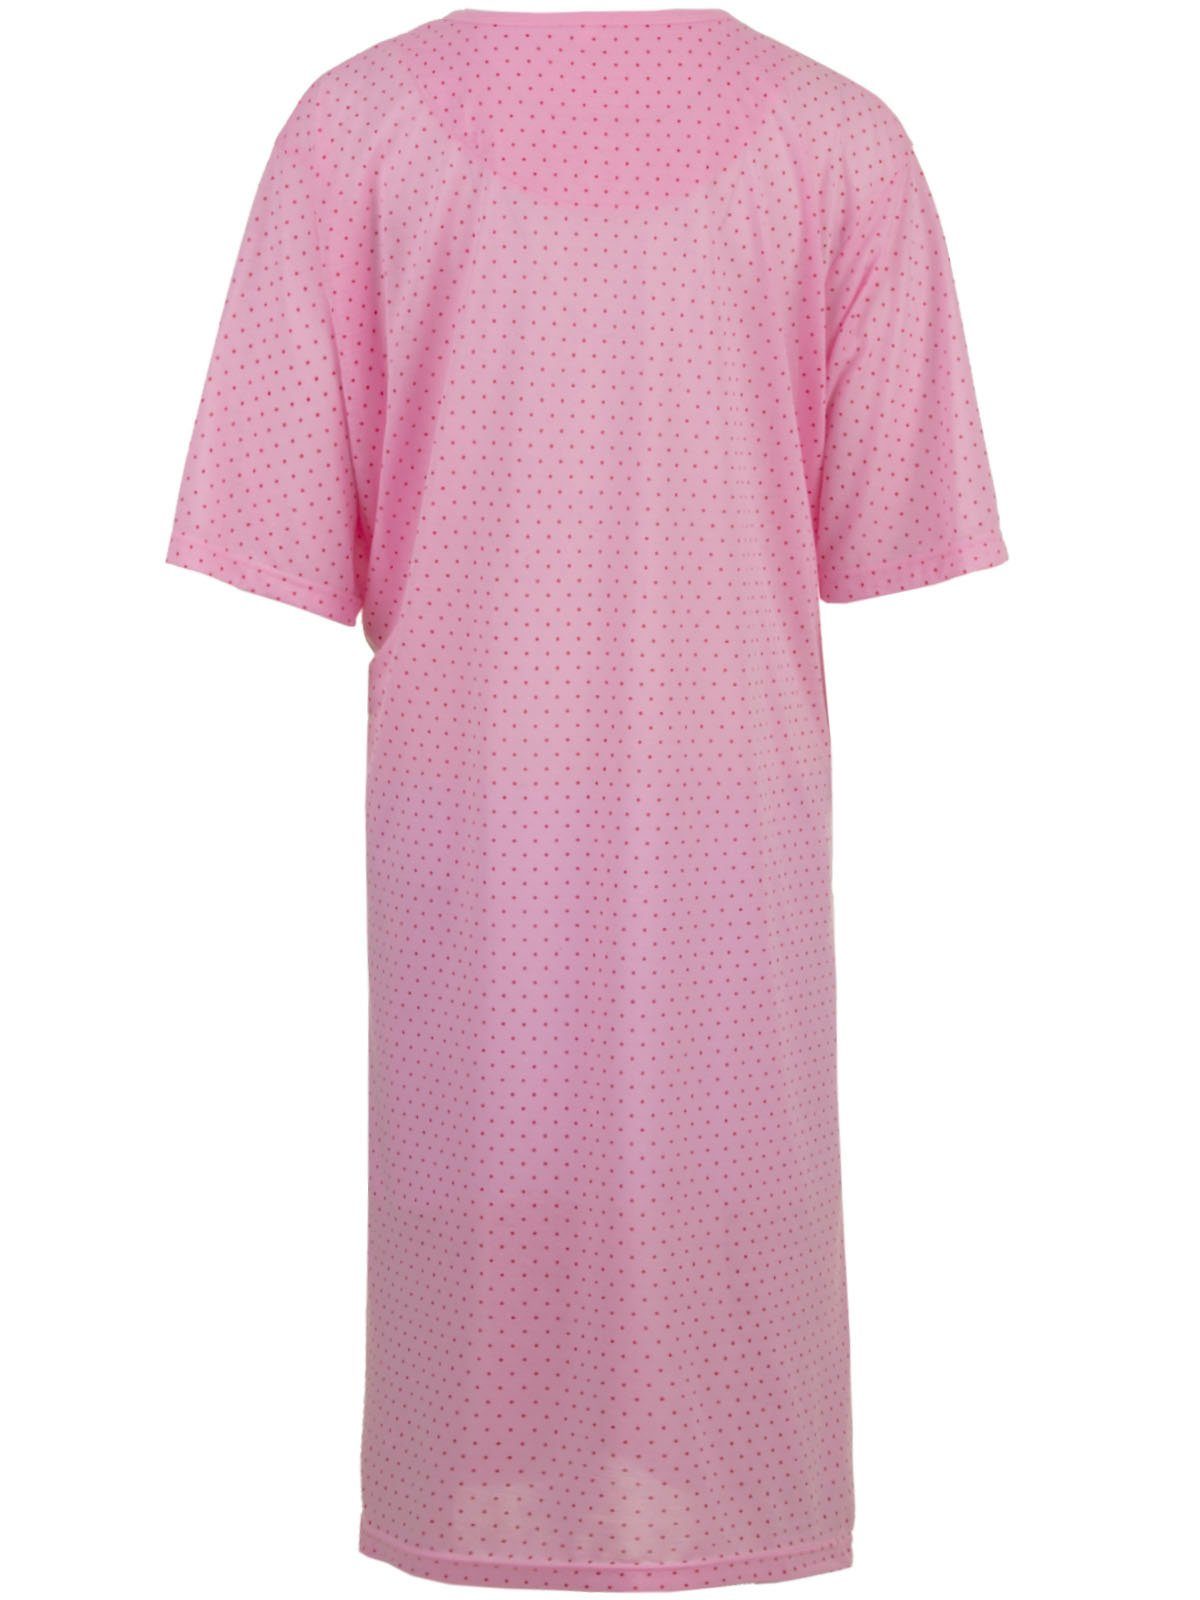 Kurzarm 3XL-6XL Punkte Nachthemd Lucky - Nachthemd rosa